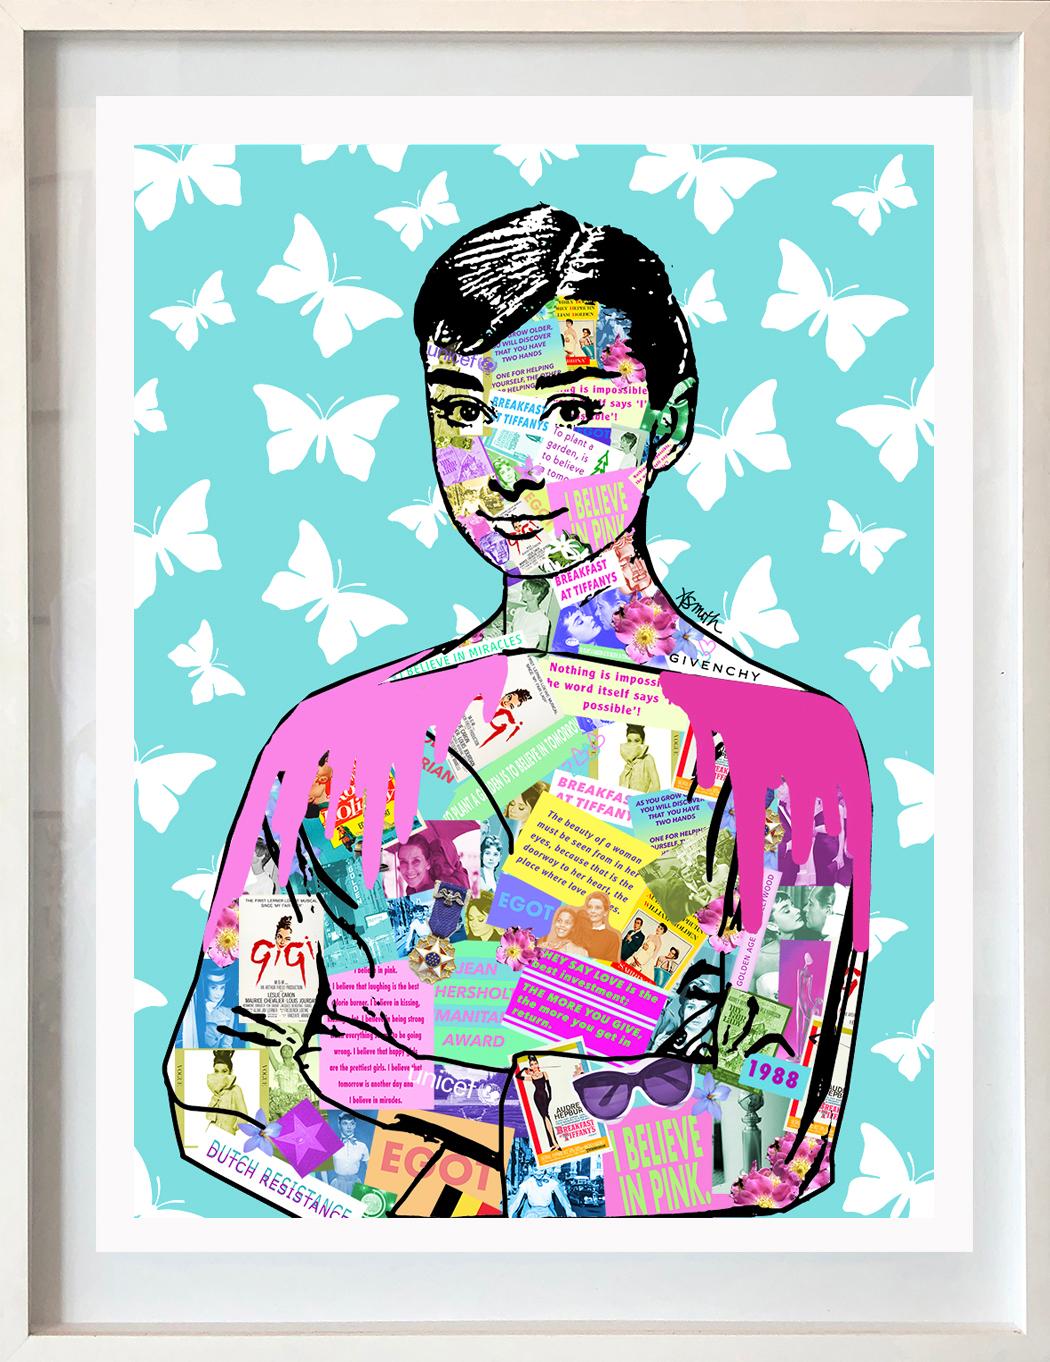 Audrey Hepburn - Framed Contemporary POP Art Portrait (Teal + Pink + White)